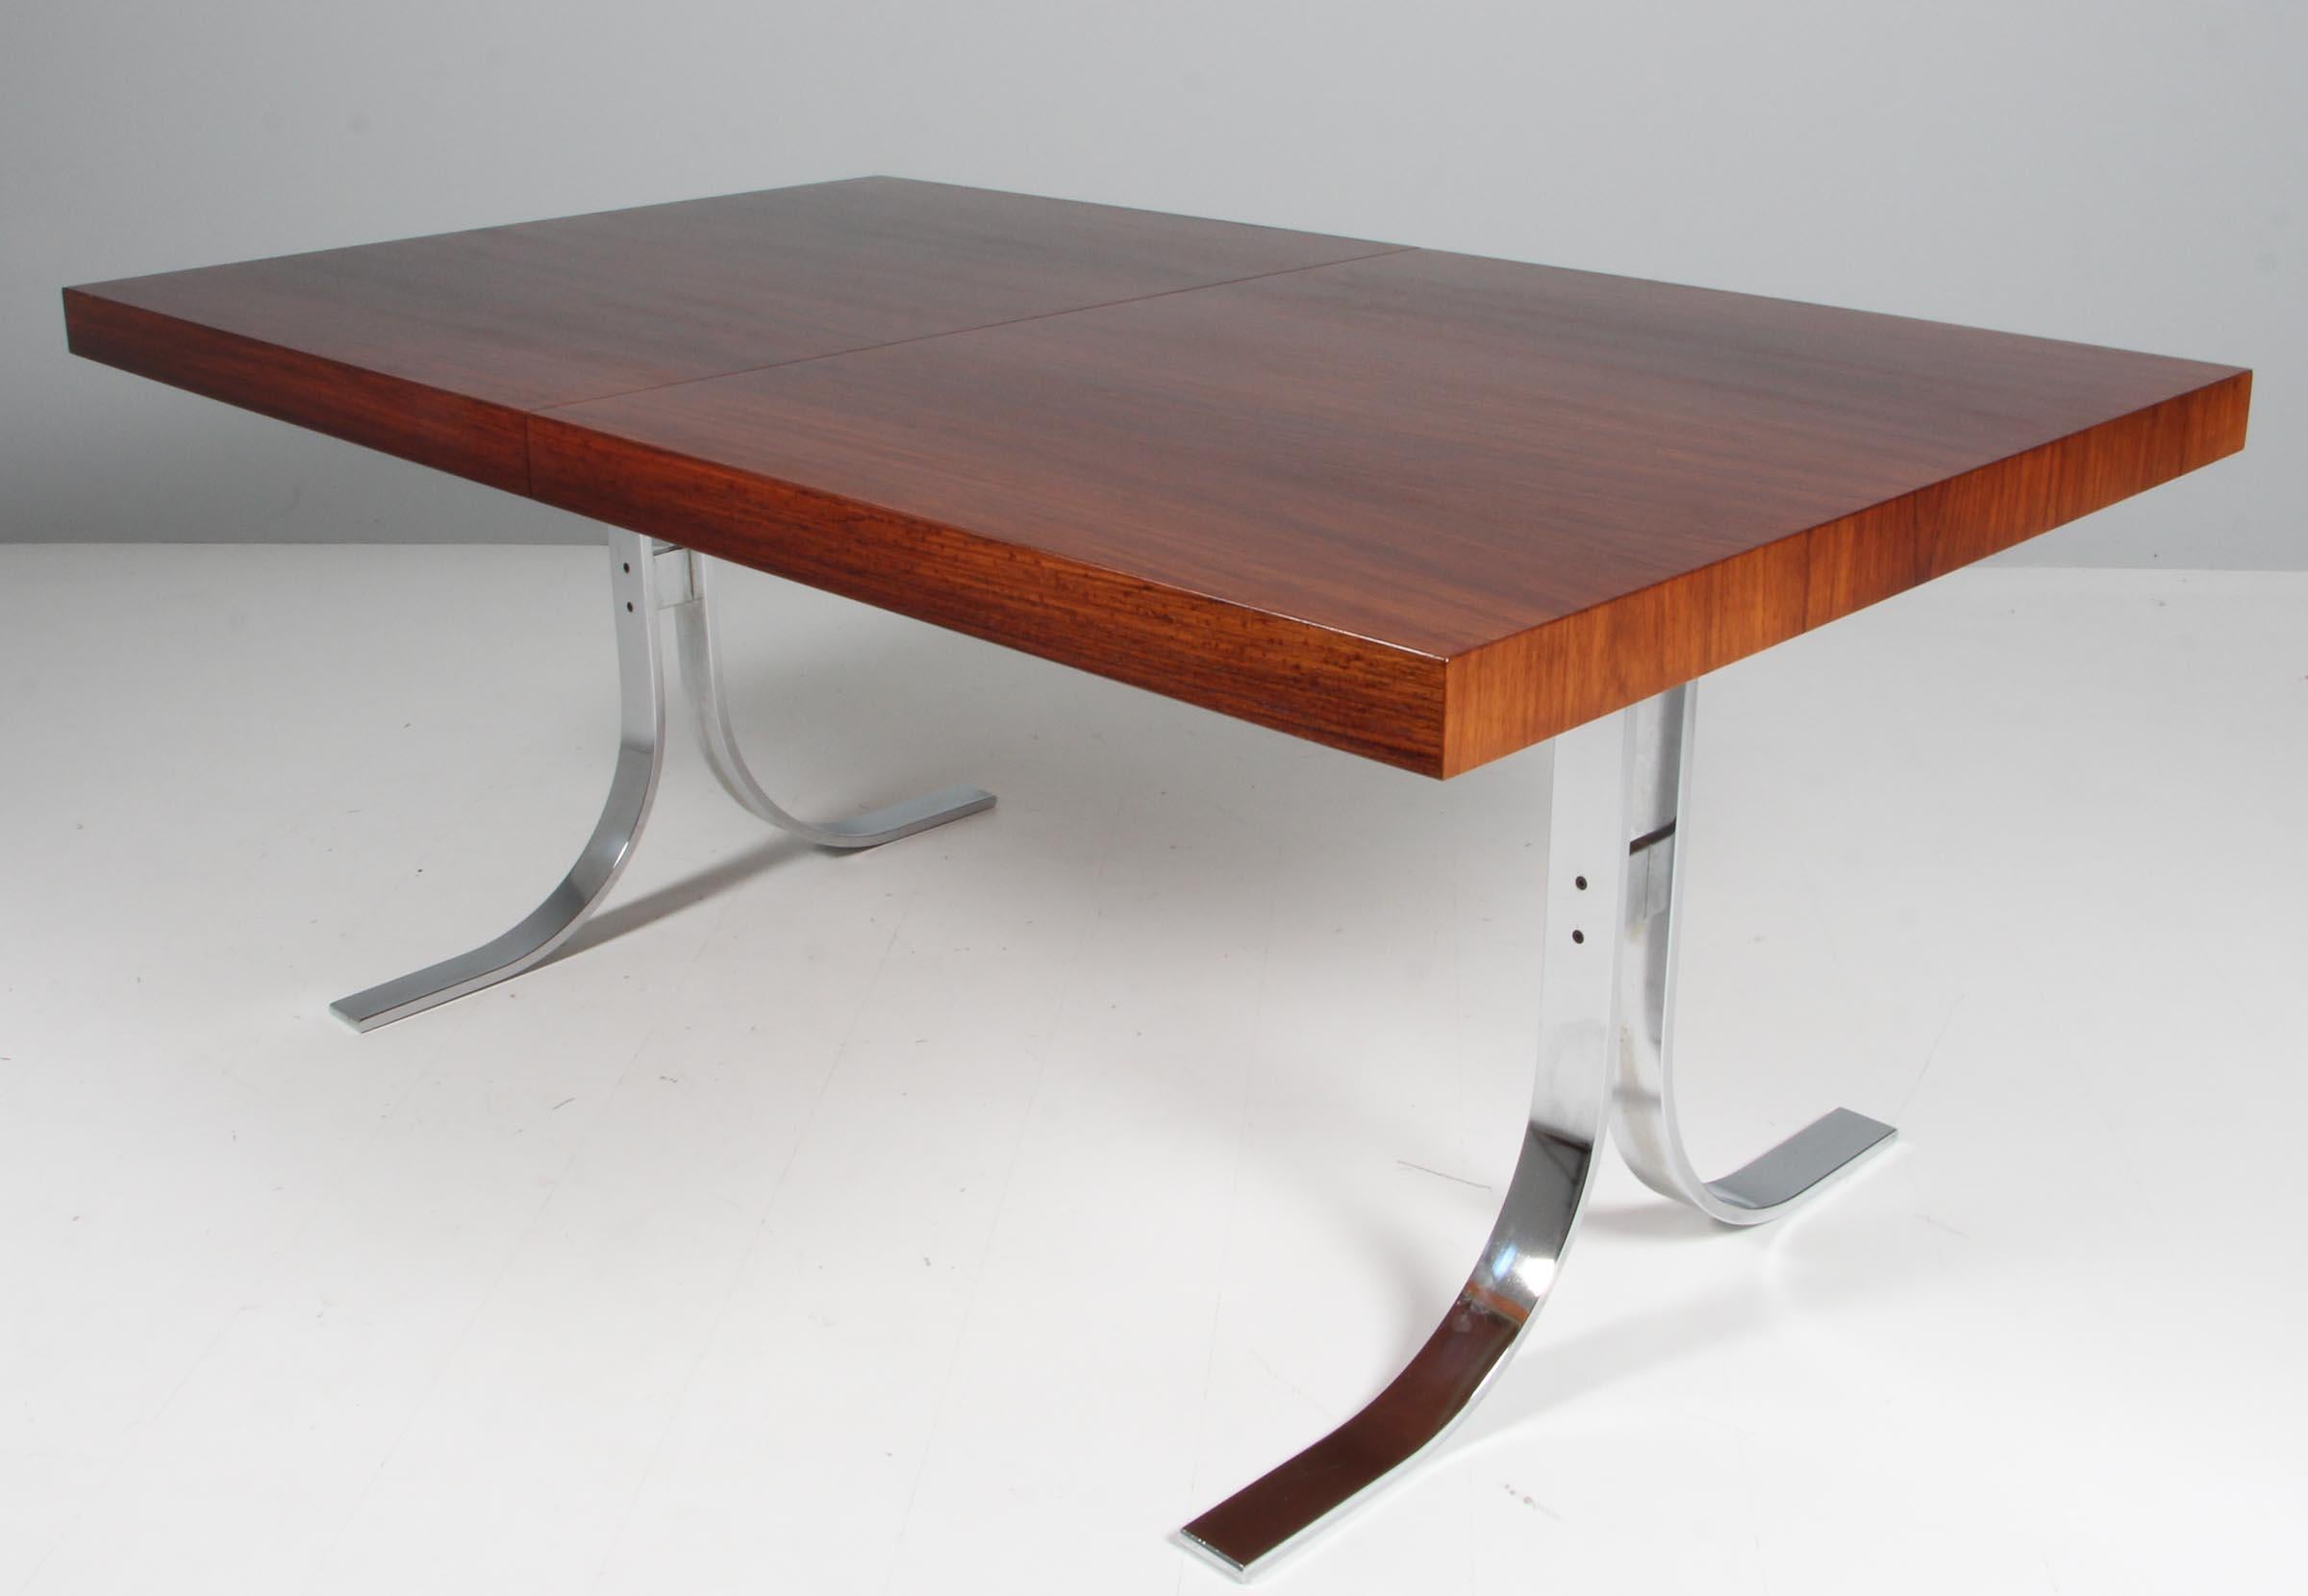 Scandinavian Modern Poul Nørreklit dining table with extension leaf. Rosweood and Chromed steel